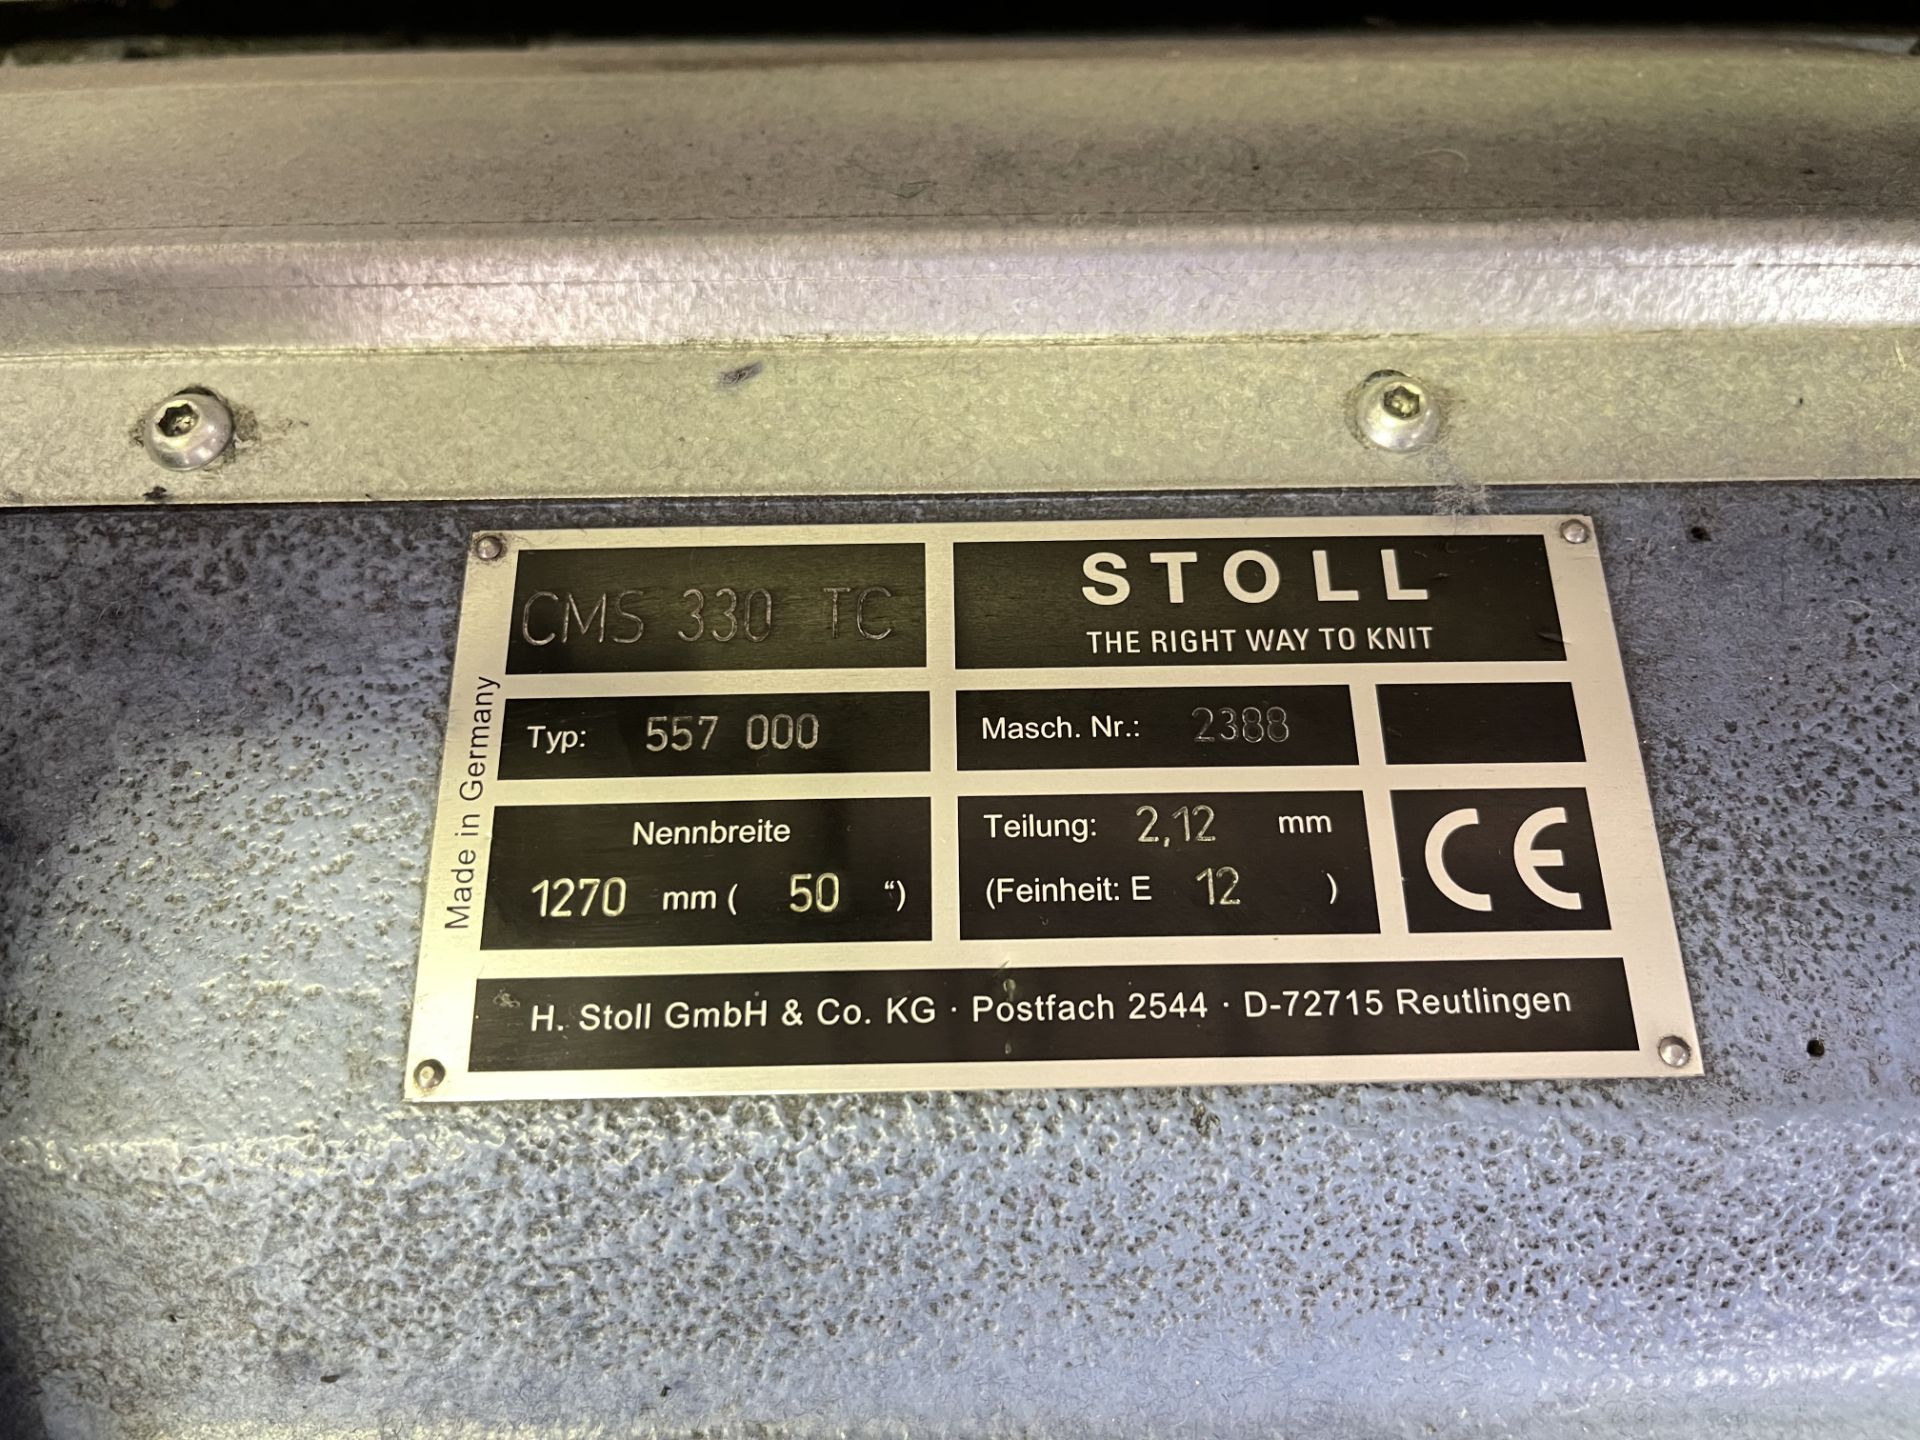 Stoll CMS 330TC Type 557 000 Flat Bed Knitting Machine - Image 8 of 8